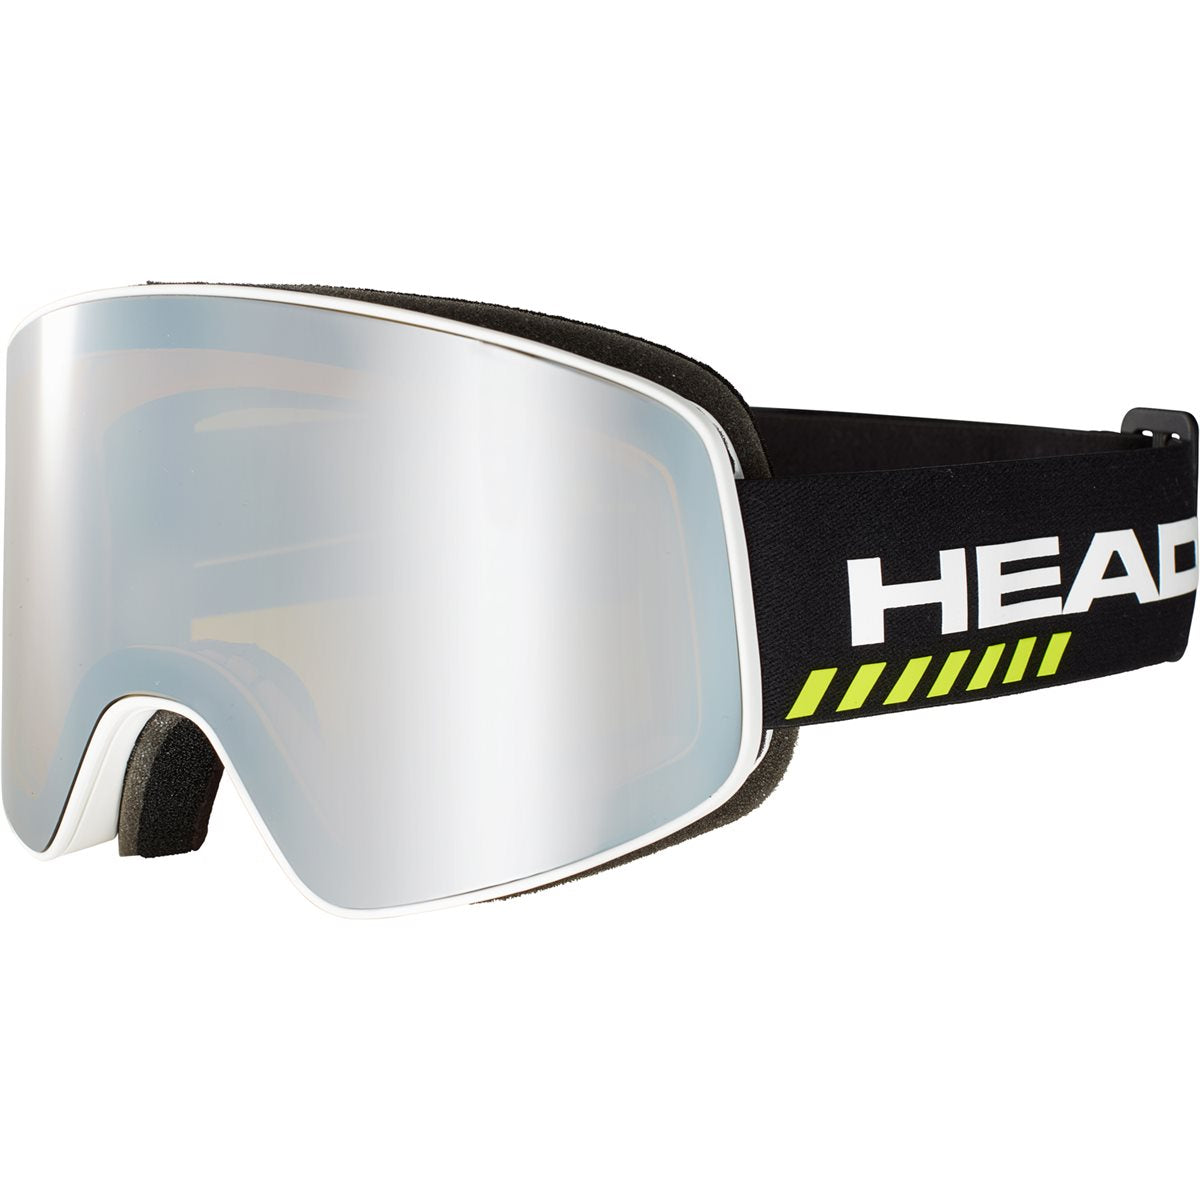 Head Horizon 2.0 Race Goggle